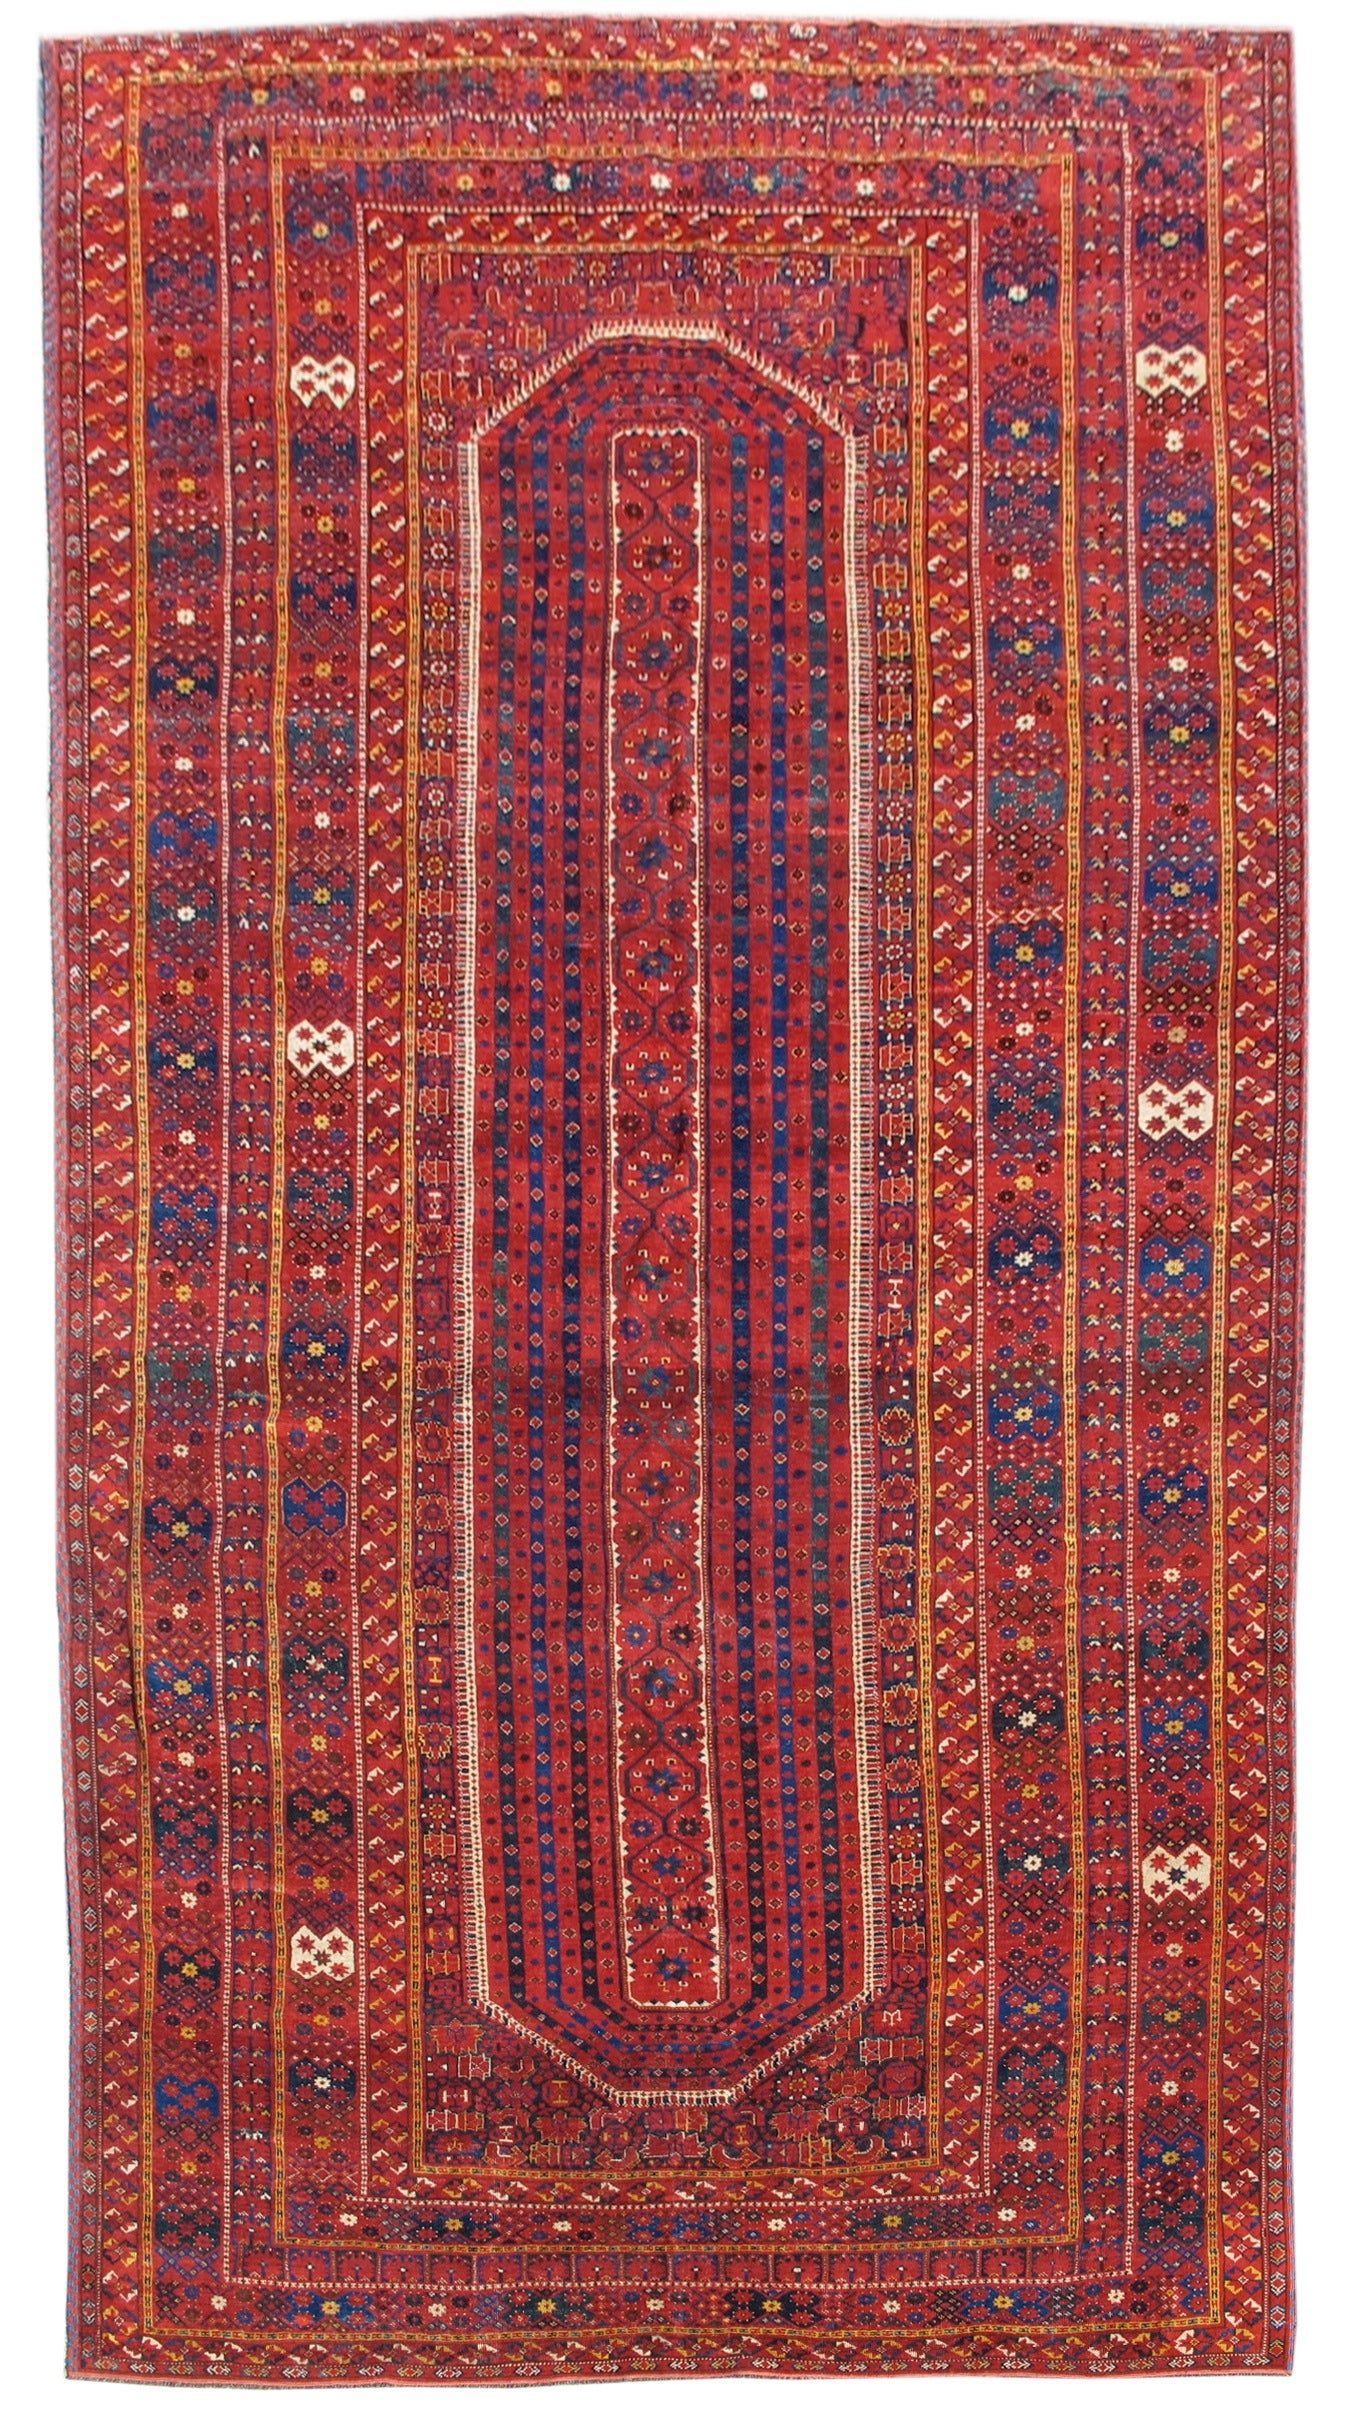 Mid 19th Century  Bashir Gallery-Sized Carpet